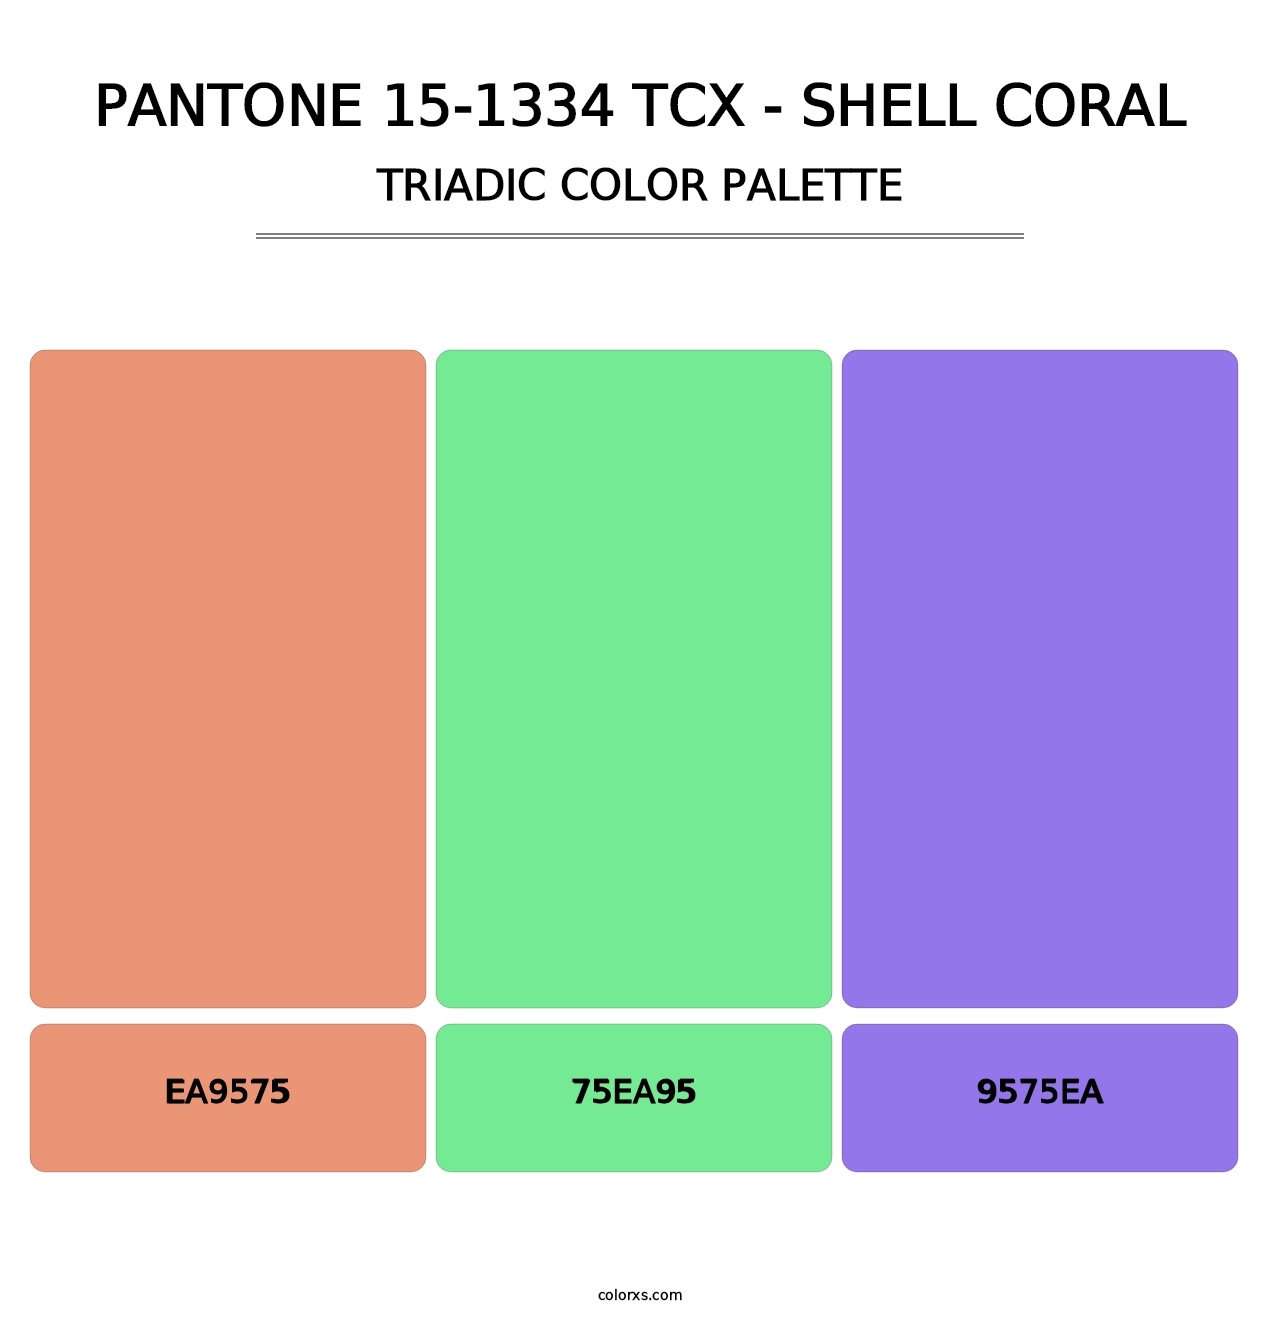 PANTONE 15-1334 TCX - Shell Coral - Triadic Color Palette